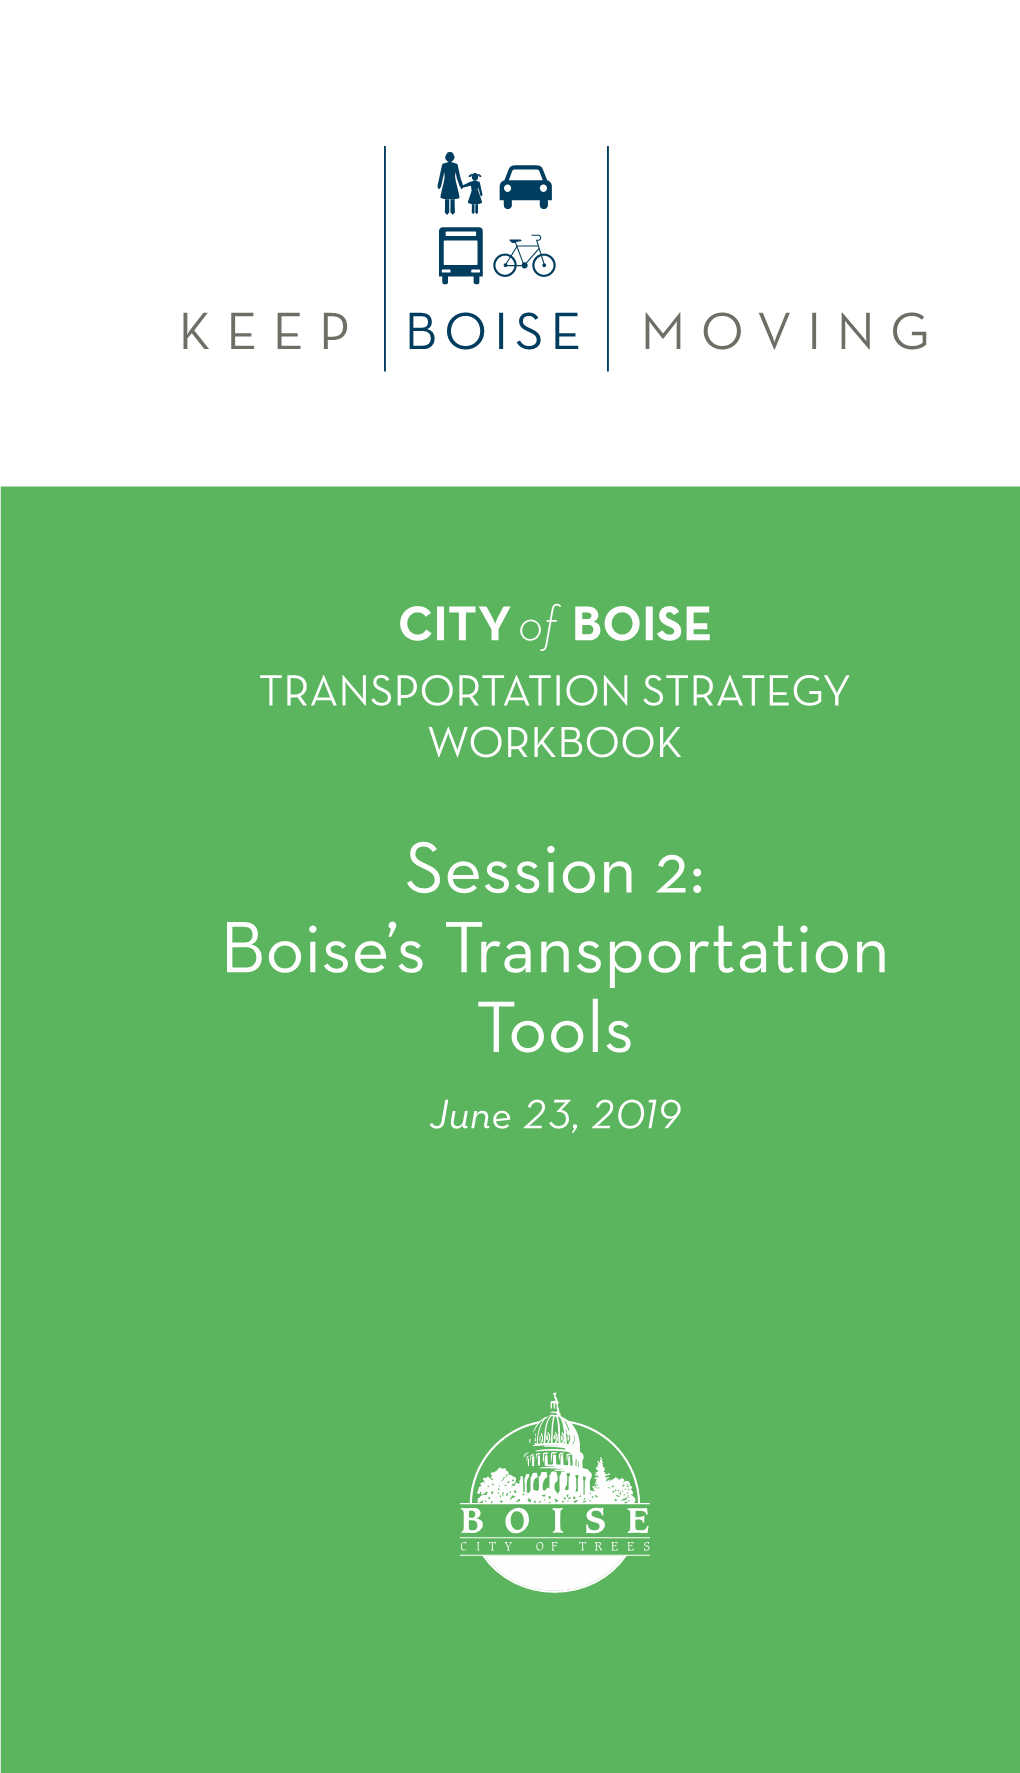 Session 2: Boise's Transportation Tools